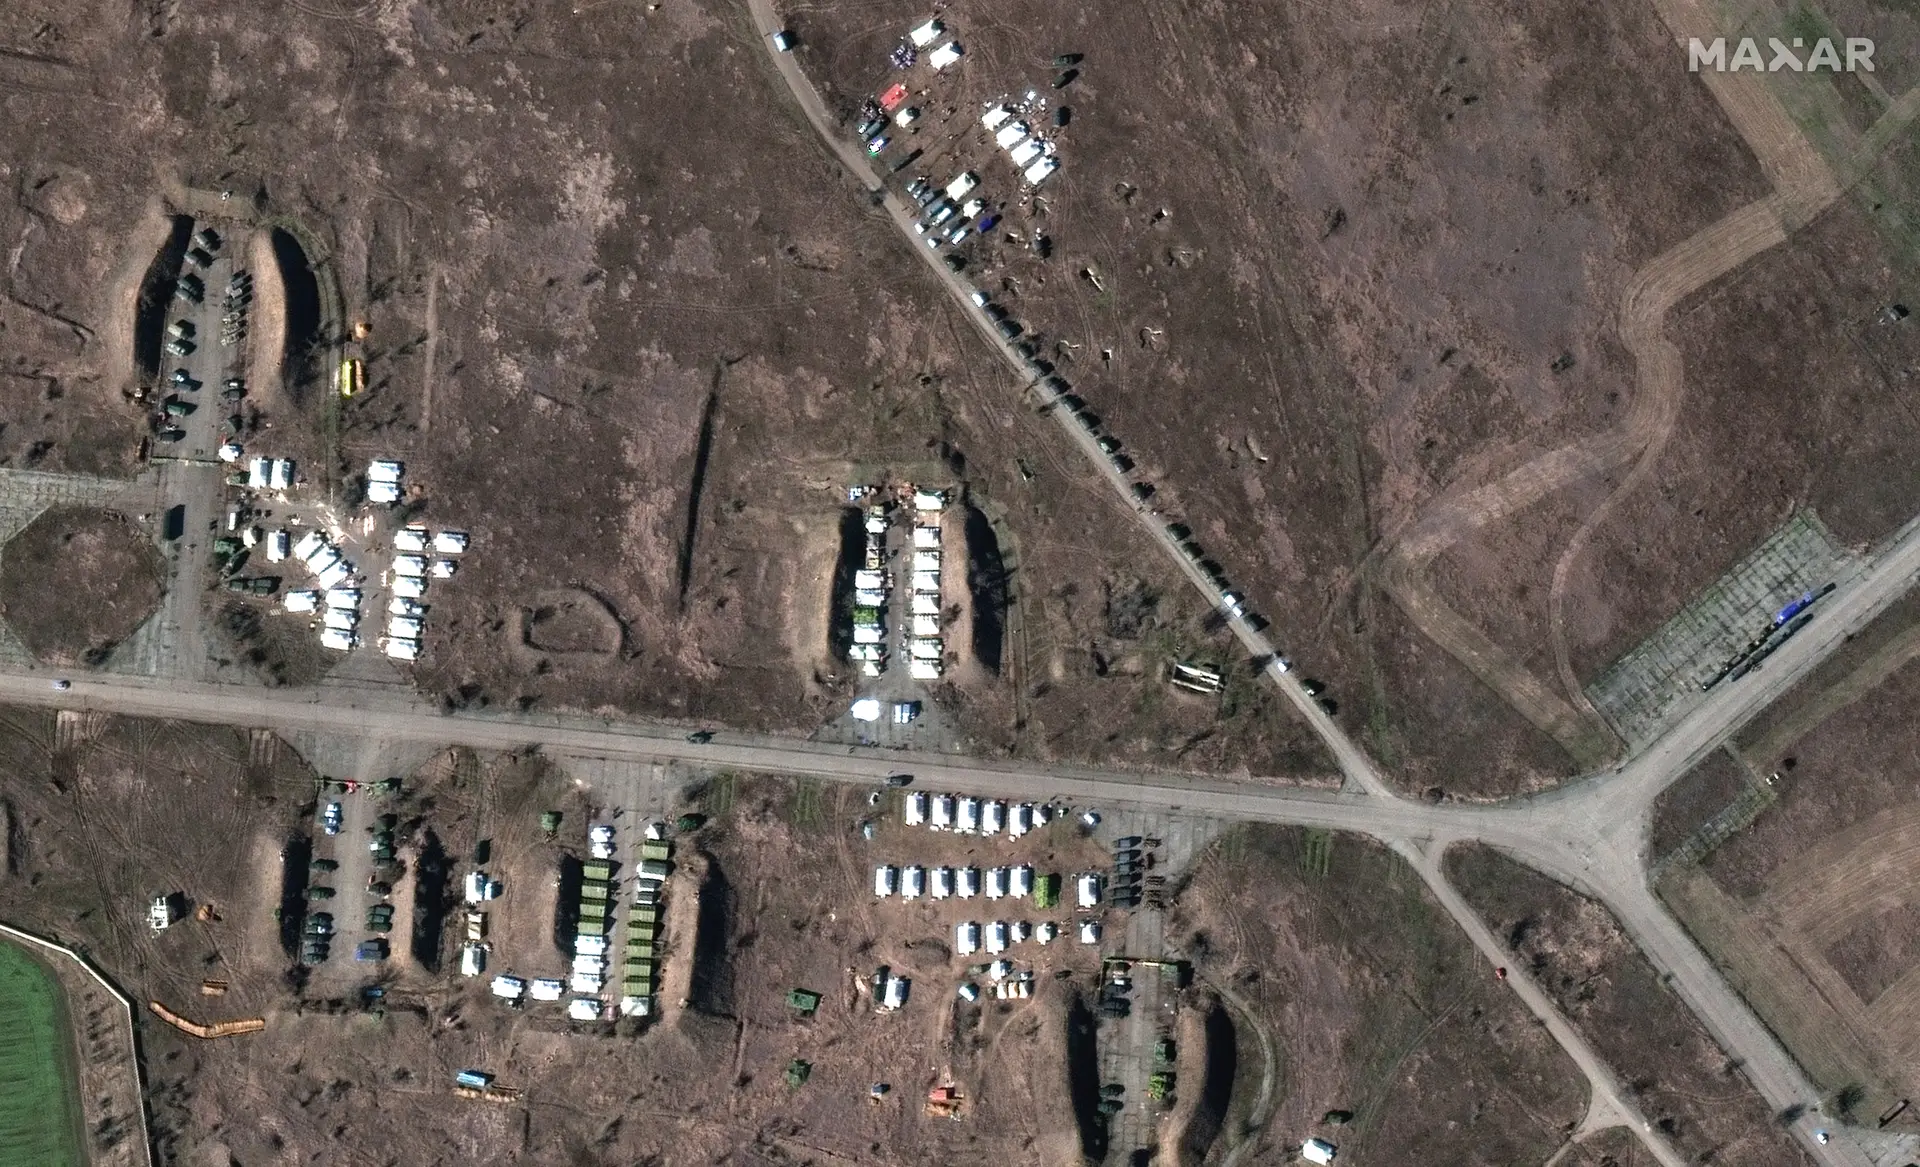 Imagens de satélite mostram tendas e equipamento perto da base aérea de Oktyabrskoye, na Crimeia, a 10 de fevereiro (Foto: EPA/MAXAR TECHNOLOGIES HANDOUT)